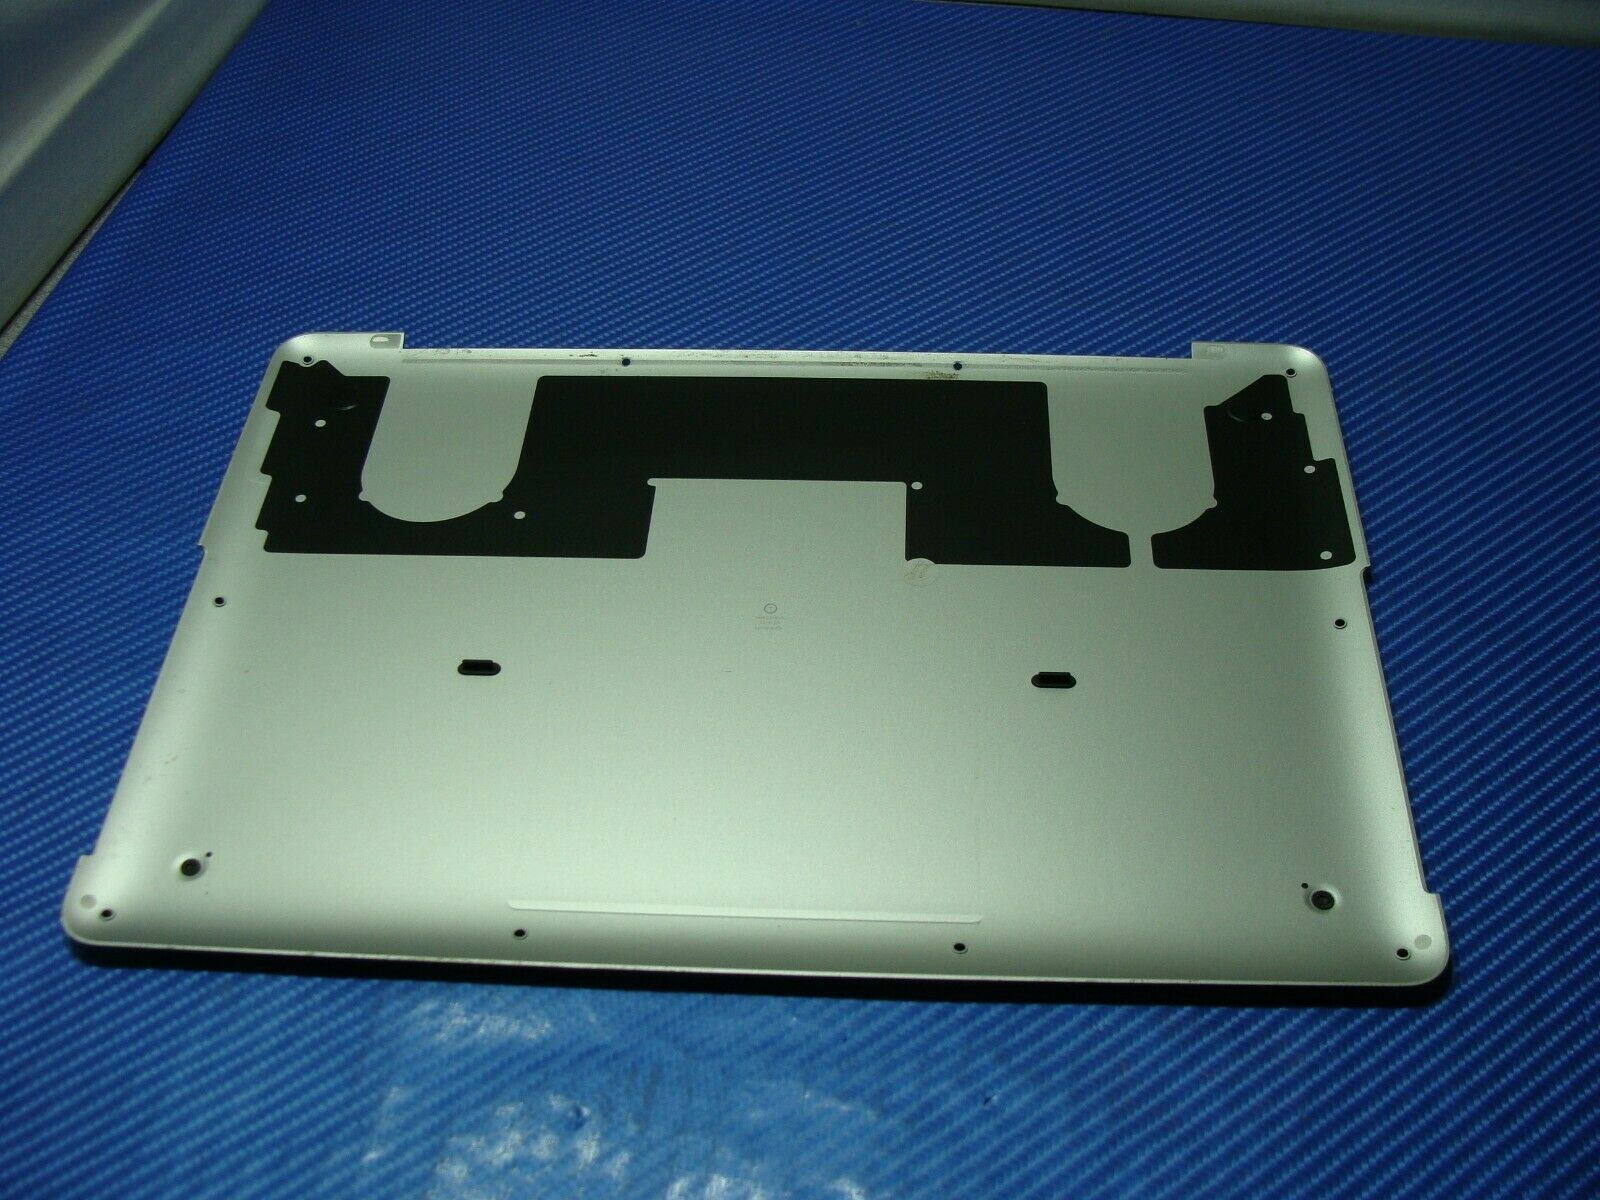 MacBook Pro A1425 ME662LL/A Early 2013 13